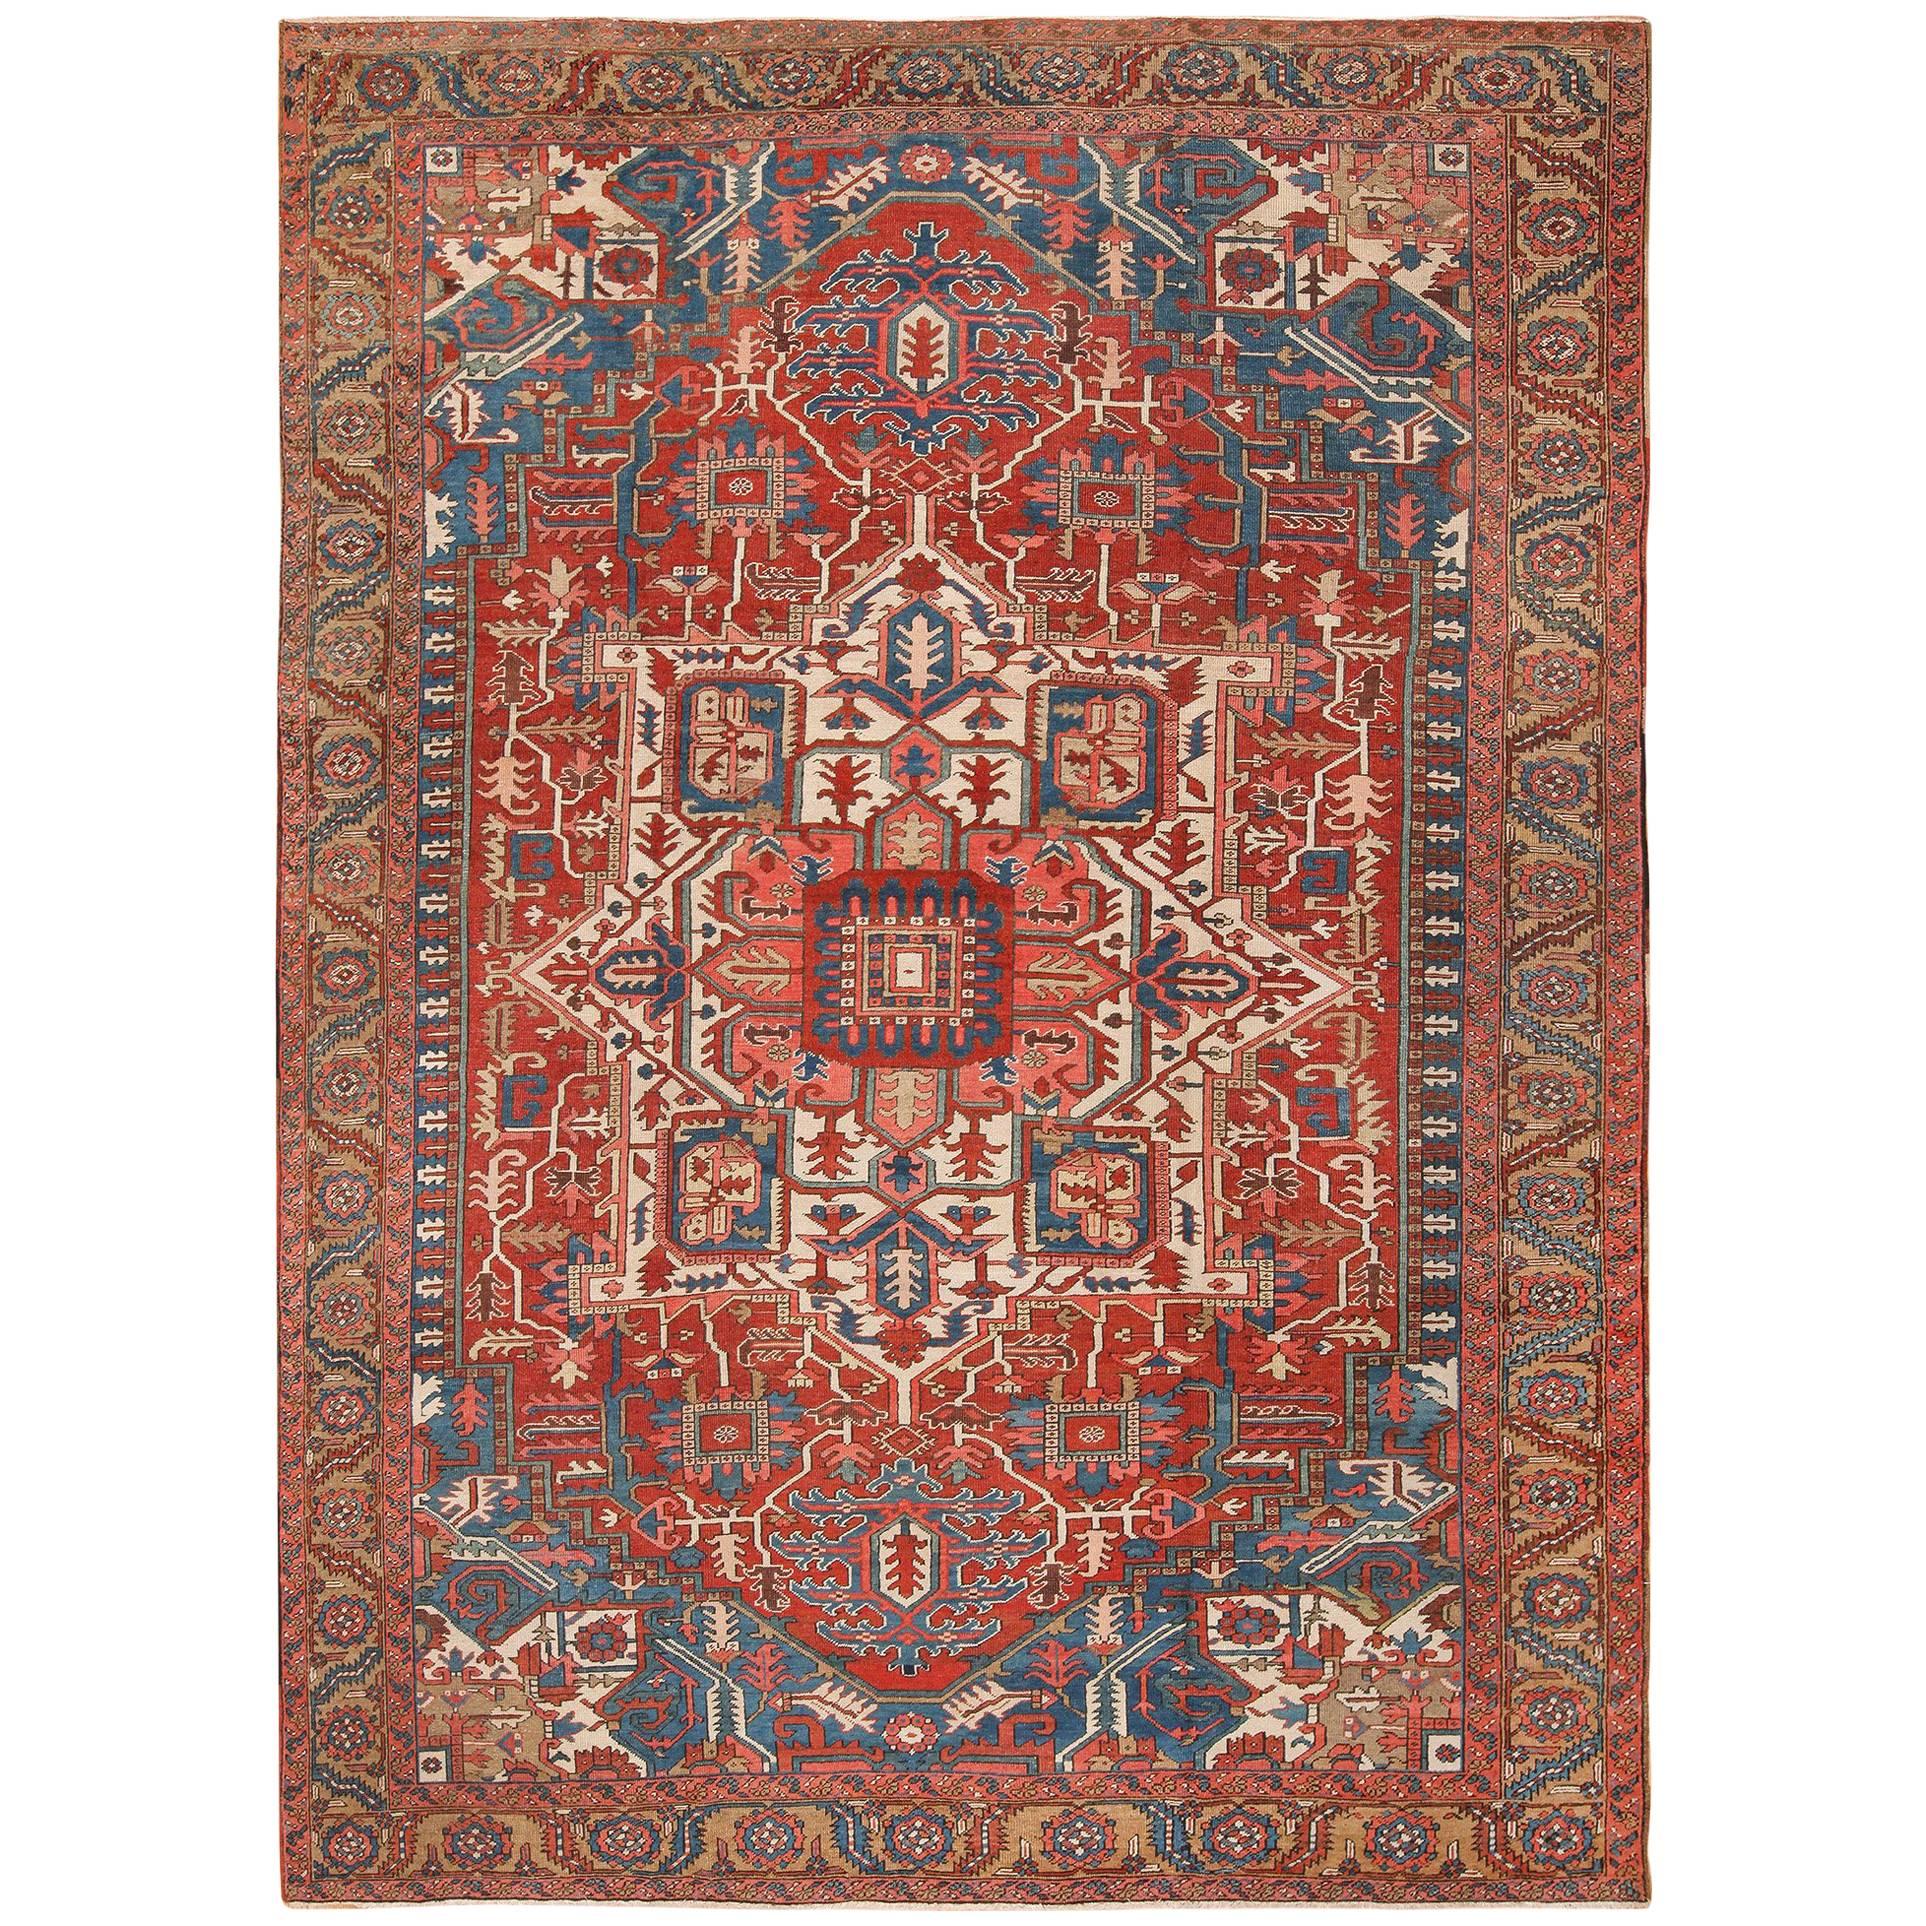 Room Size Antique Persian Heriz Rug. Size: 10 ft x 13 ft (3.05 m x 3.96 m)